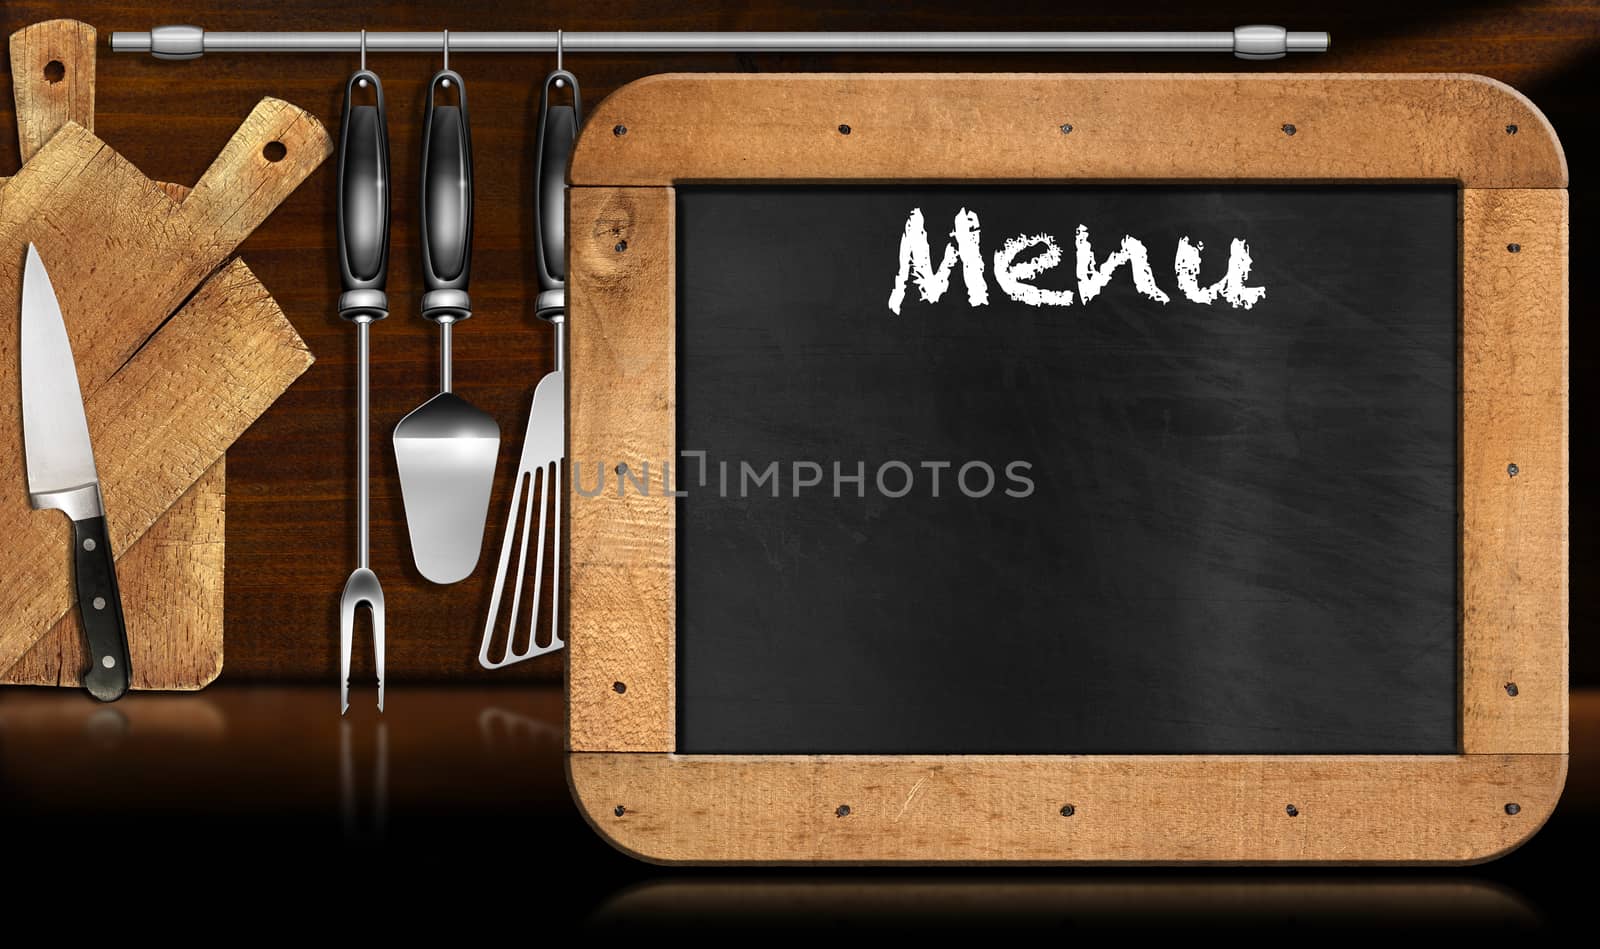 Blackboard Menu in the Kitchen by catalby